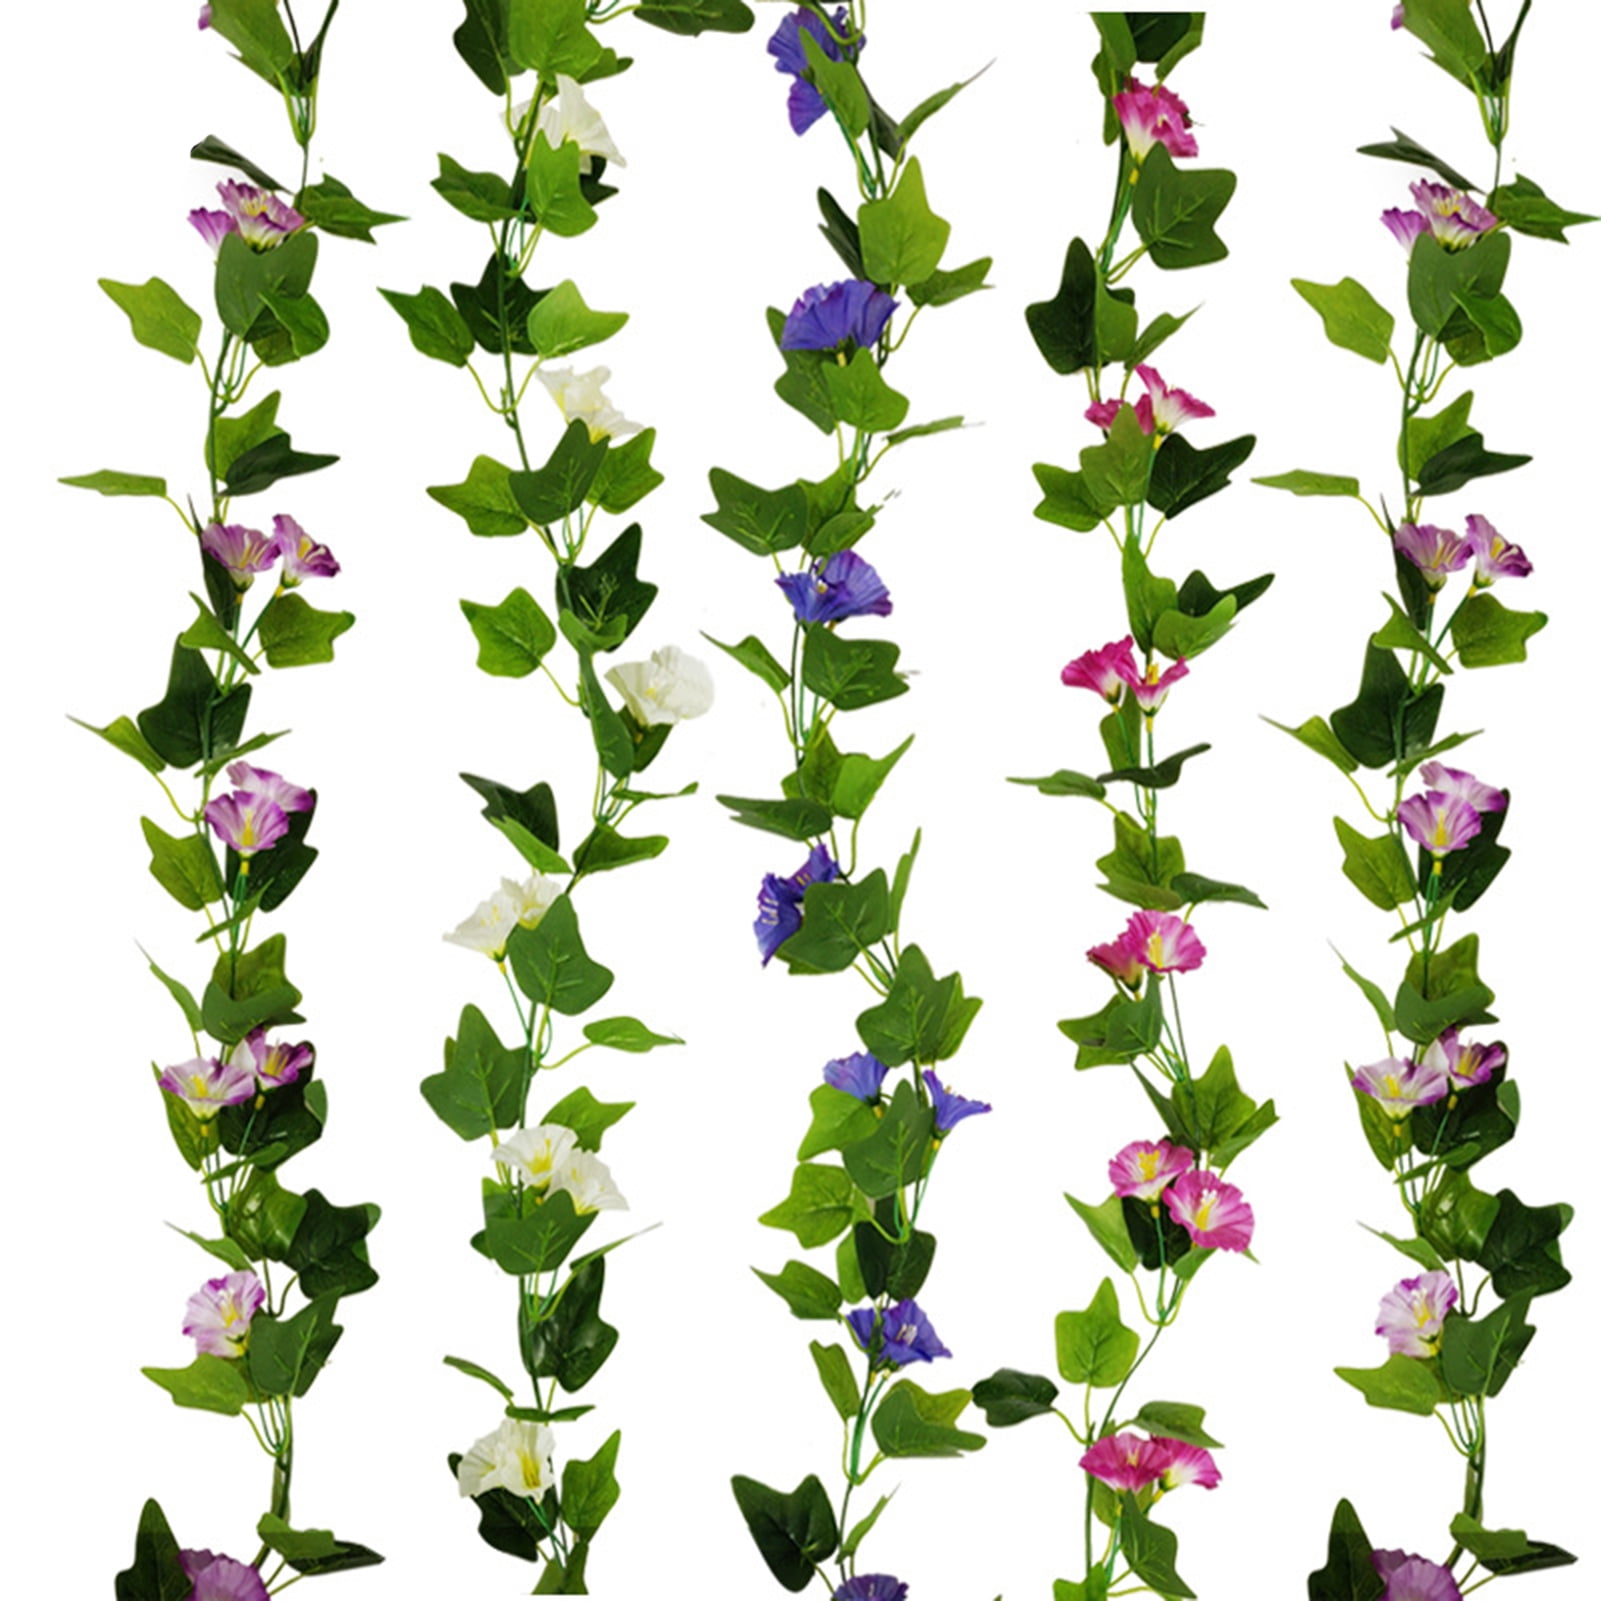 Artificial Plastic BegoniaLeaf Garlands Plant Vine Foliage Flower Home Decor NYN 